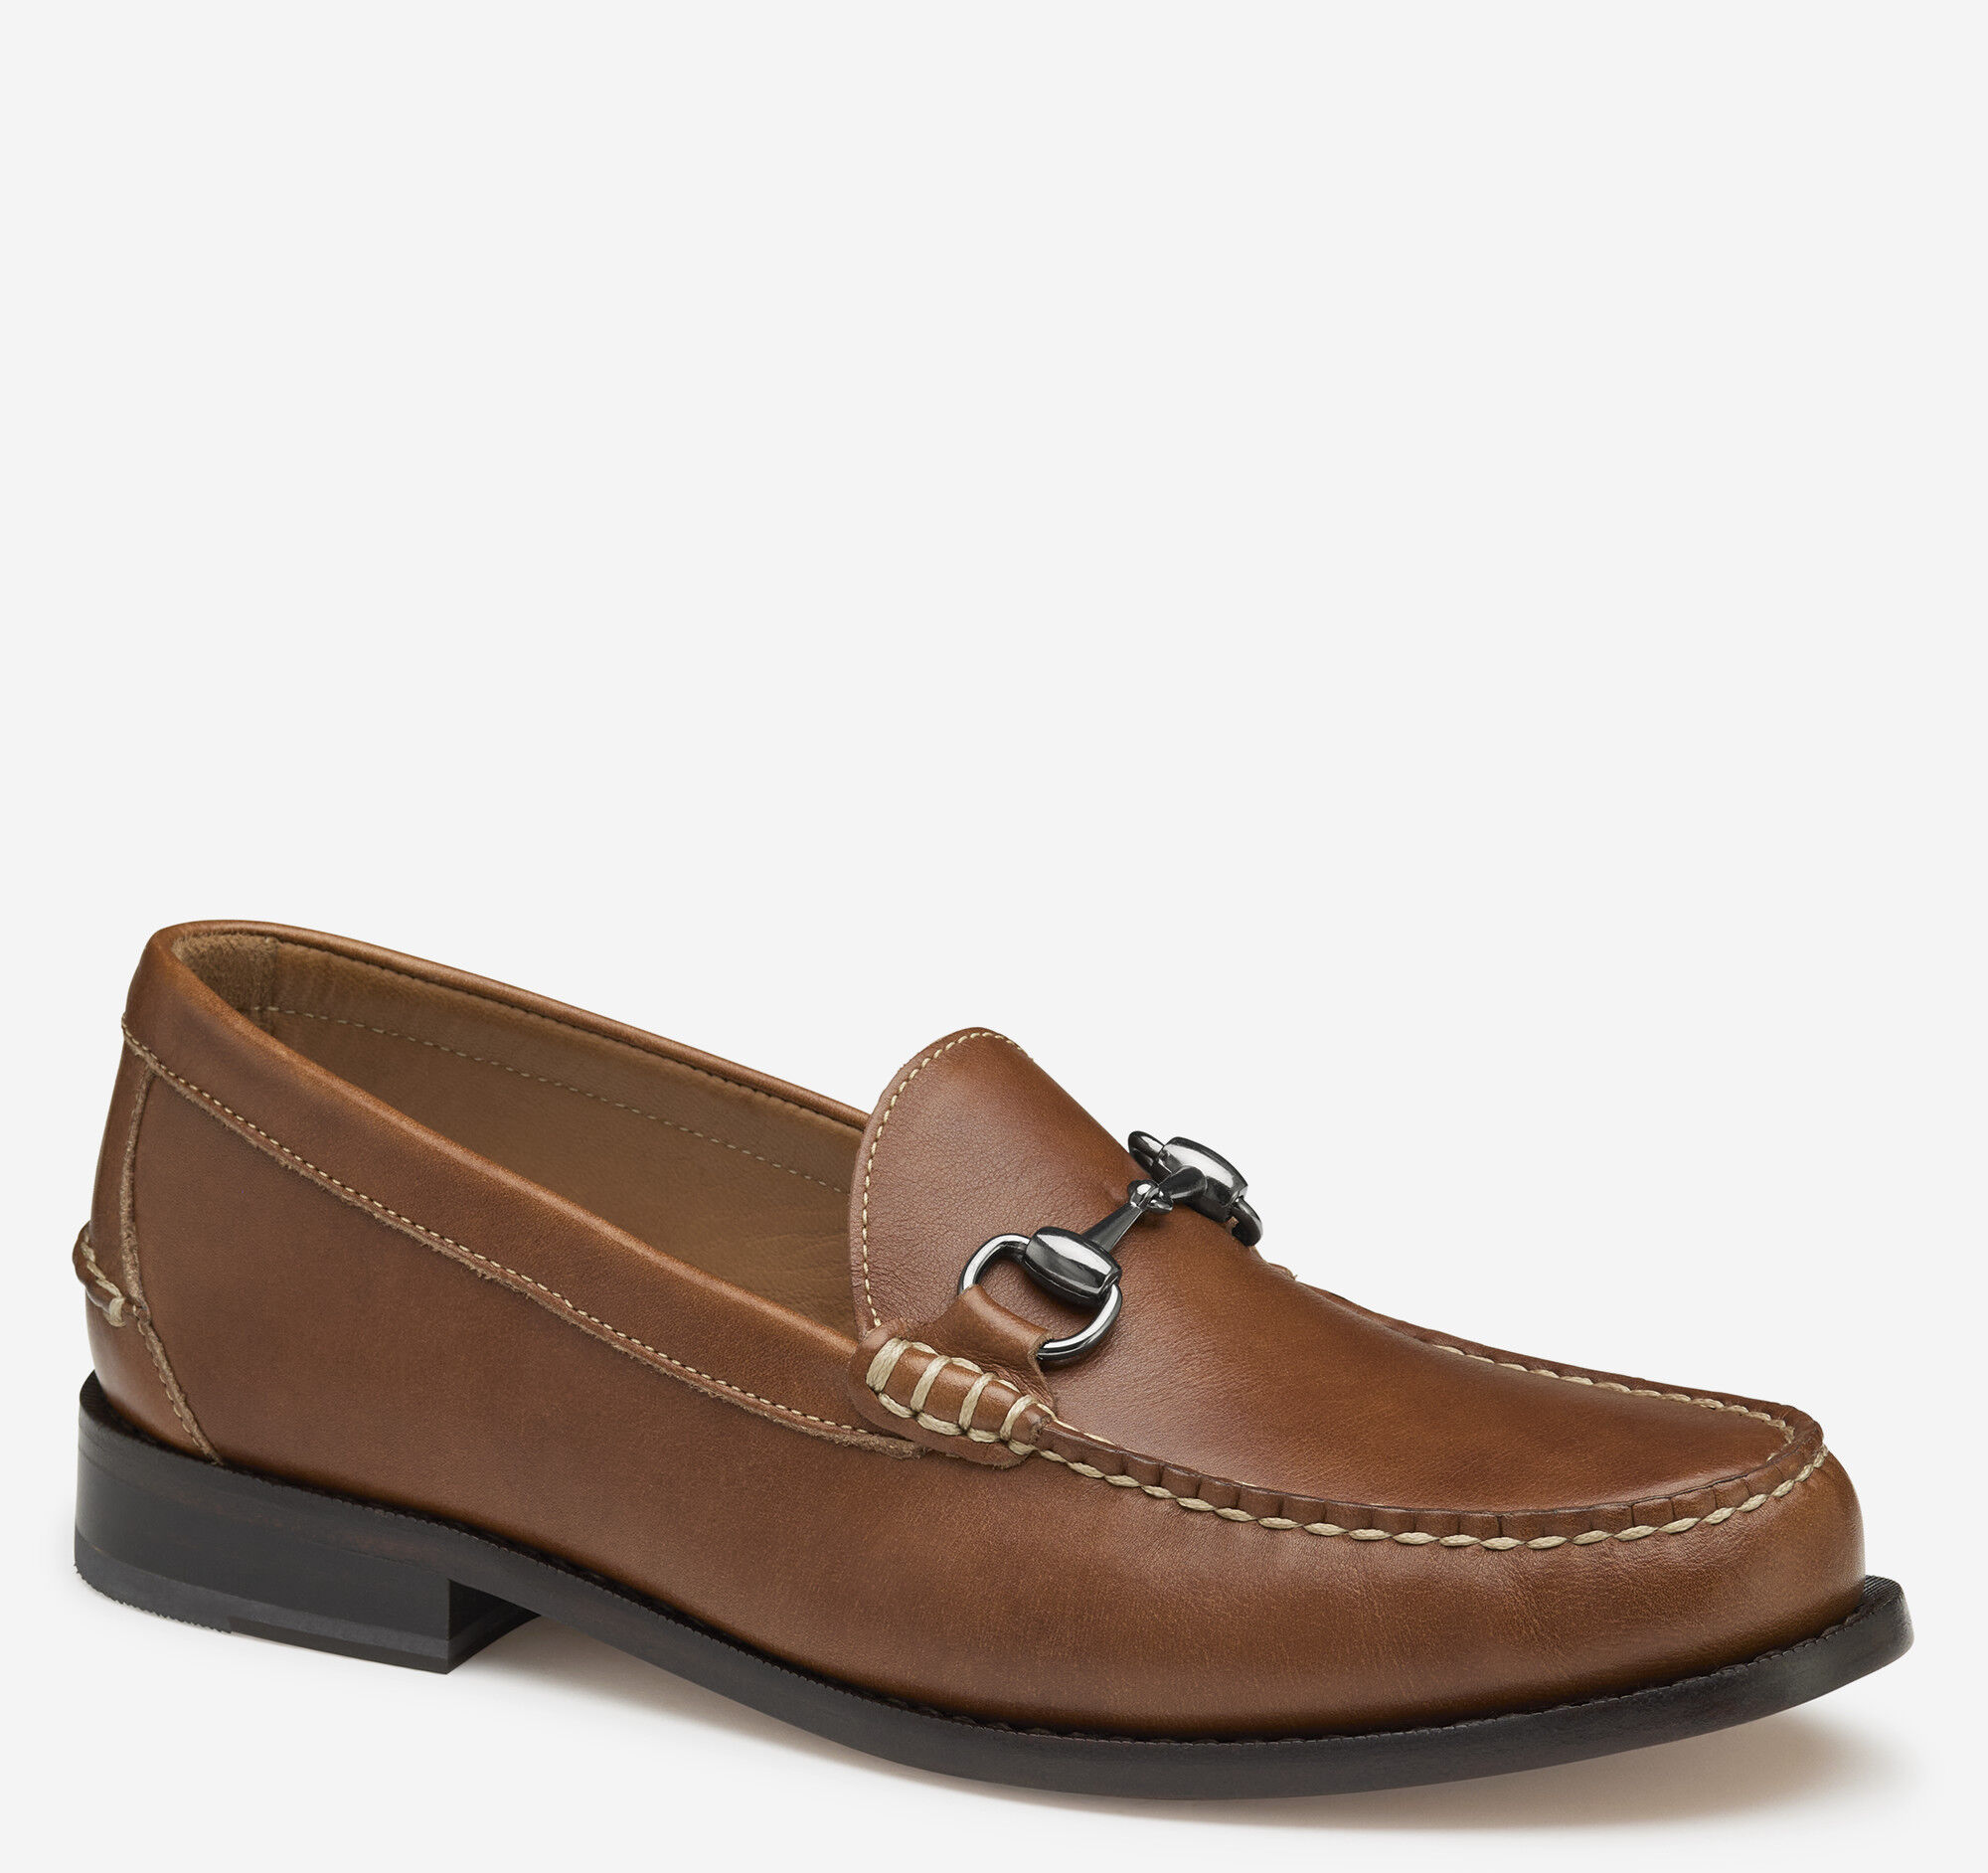 252932 SP50 Men's Shoes Size 9 M Tan Leather Slip On Johnston & Murphy 